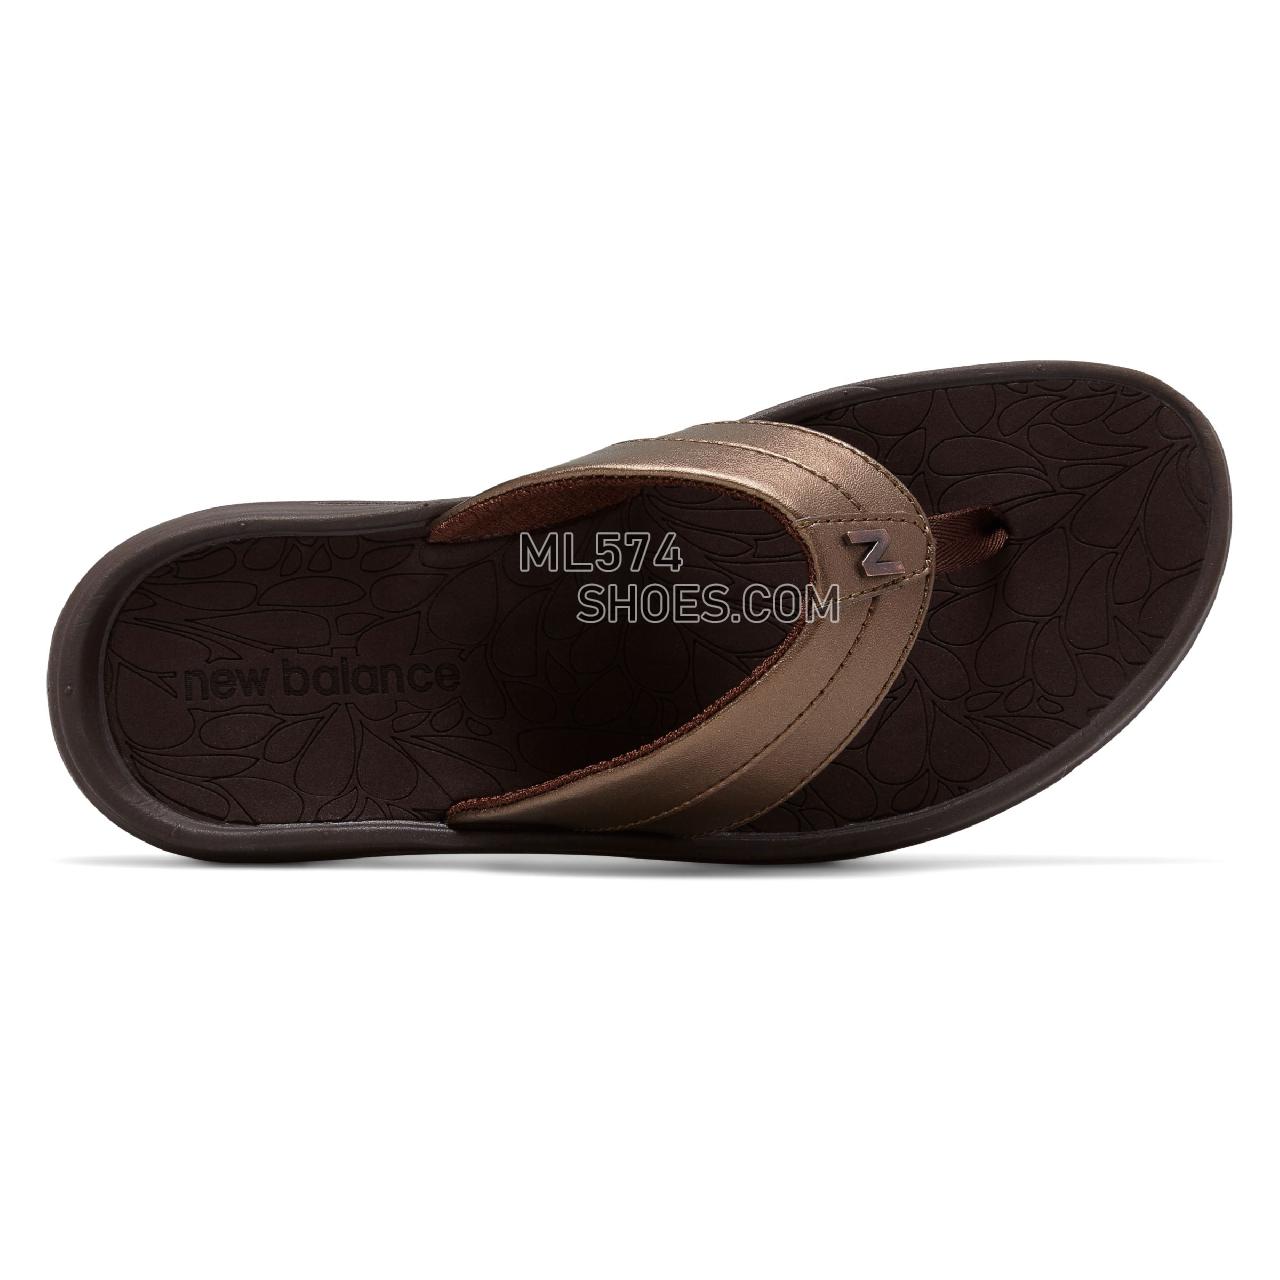 New Balance Revive Thong - Women's 6088 - Sandals Bronze - W6088BRZ